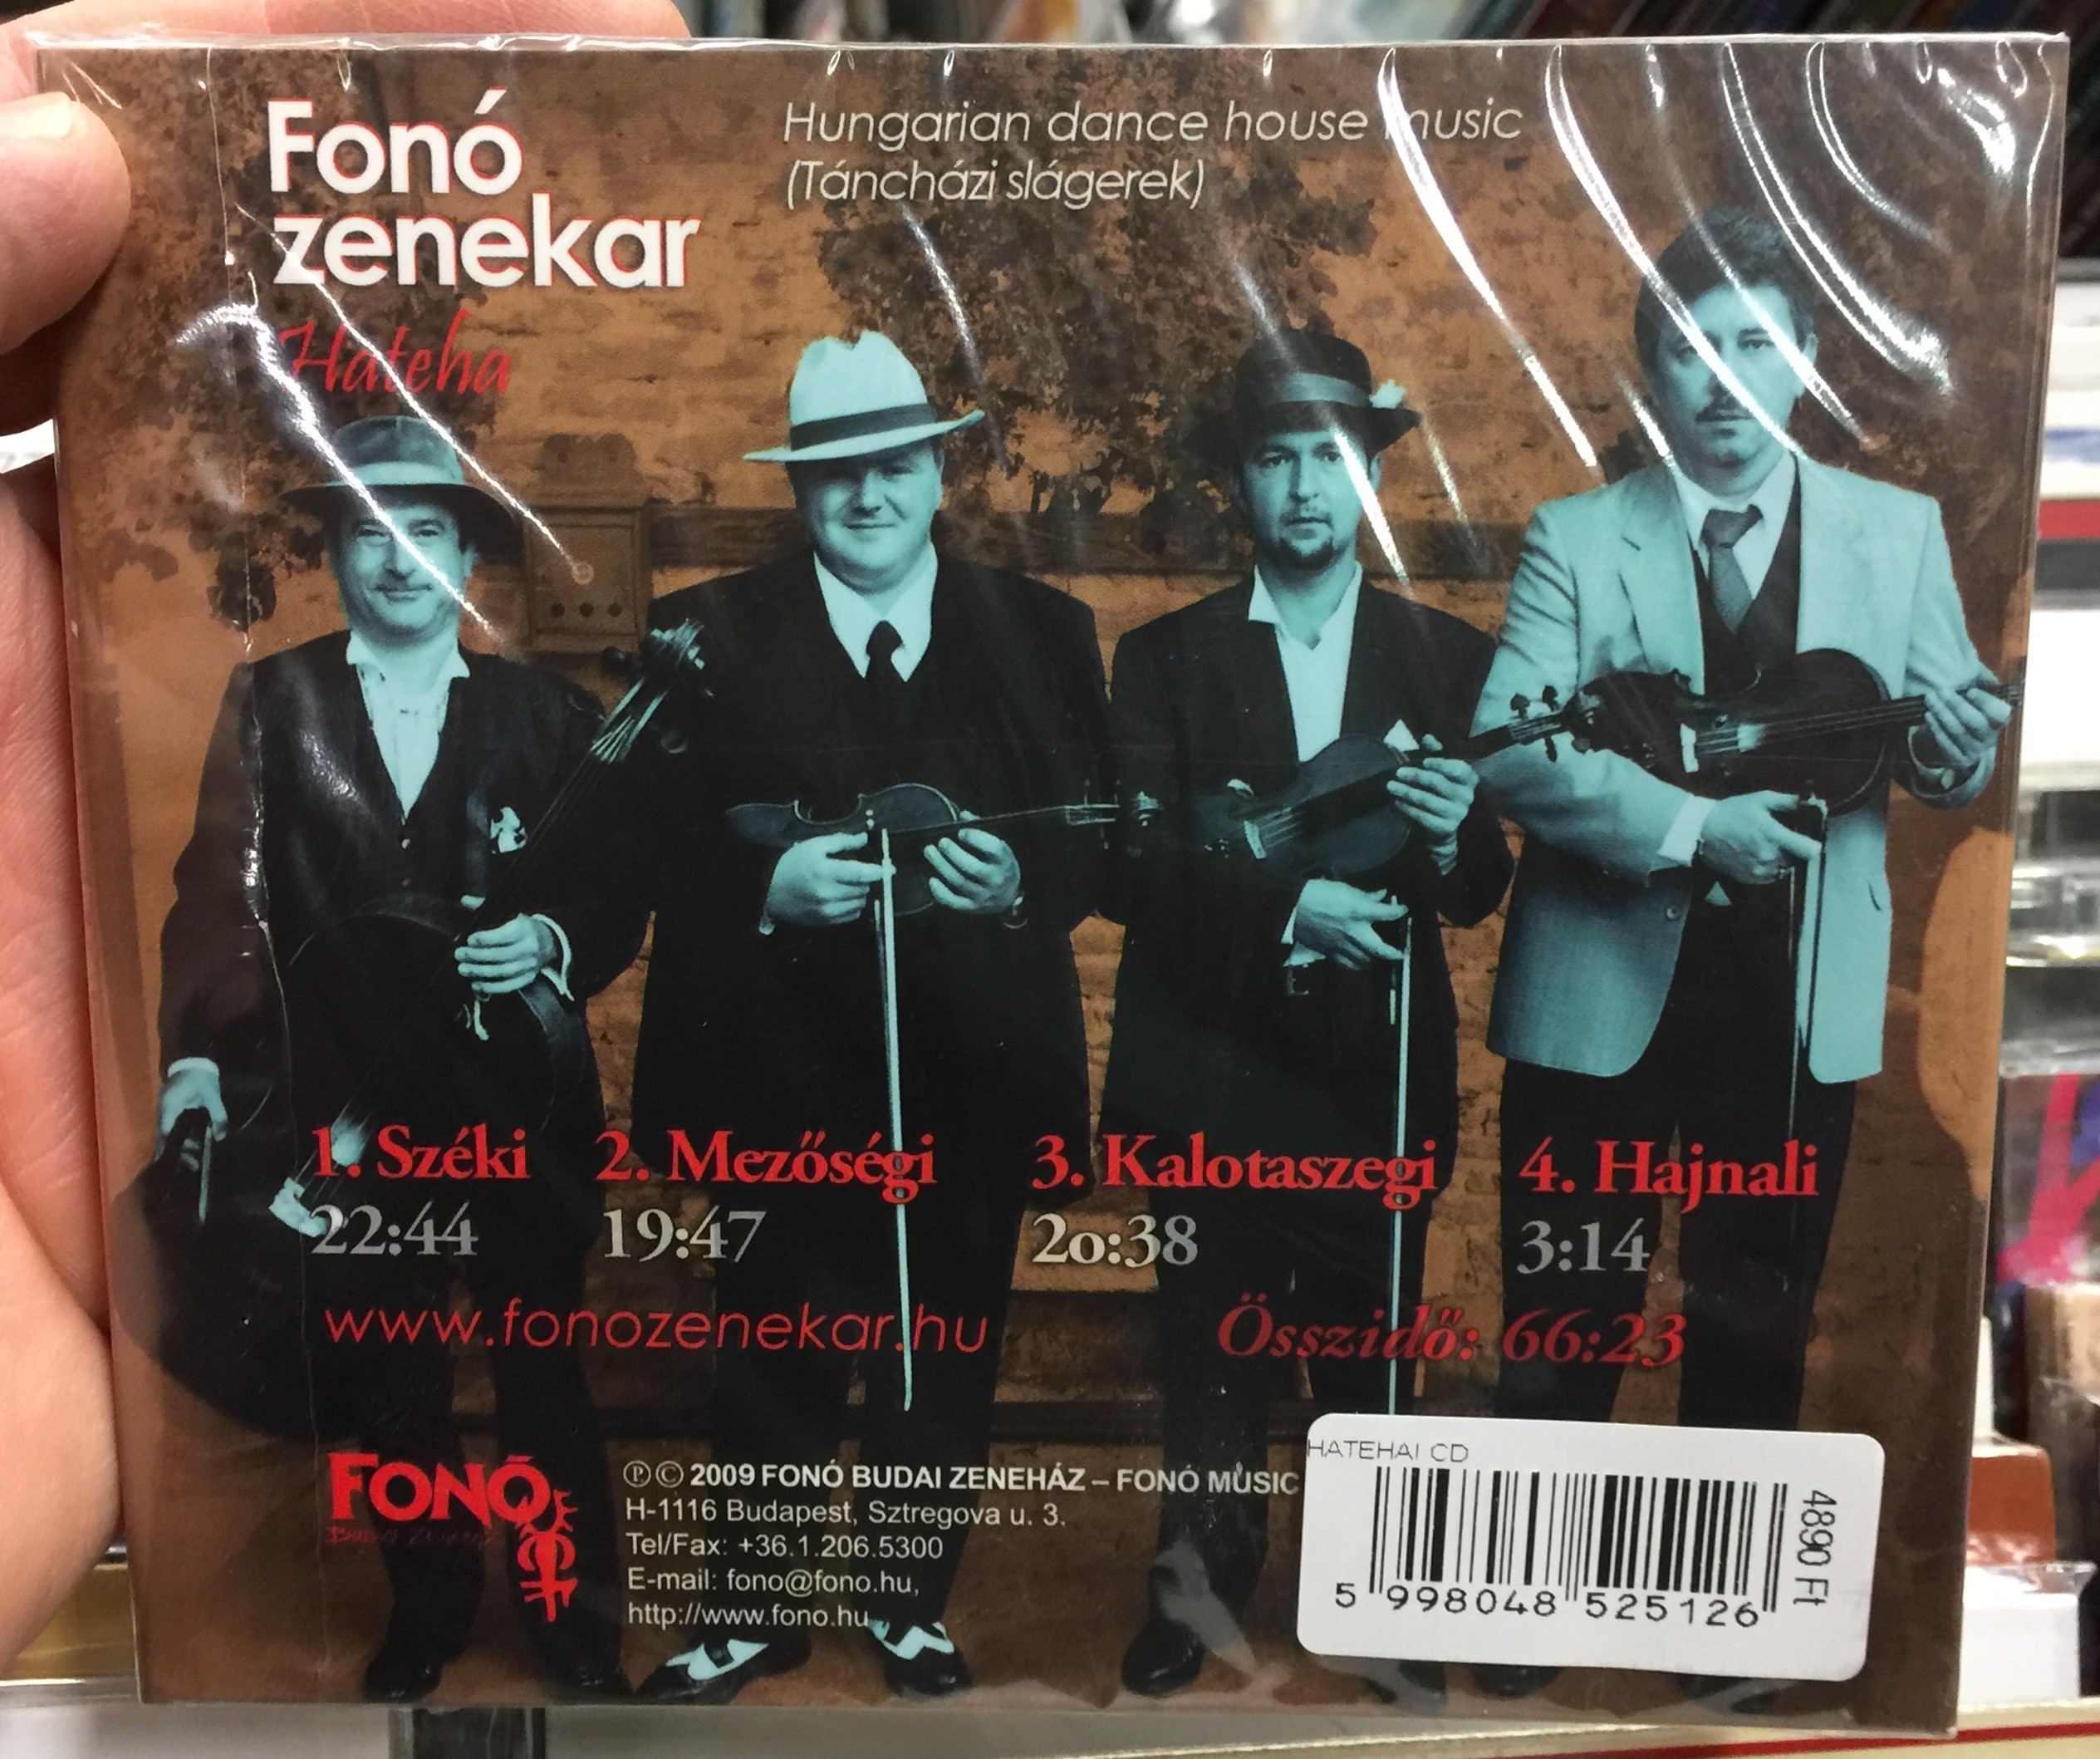 fon-zenekar-hateha-hungarian-dance-house-music-t-nch-zi-sl-gerek-fon-records-audio-cd-2009-fa-251-2-2-.jpg